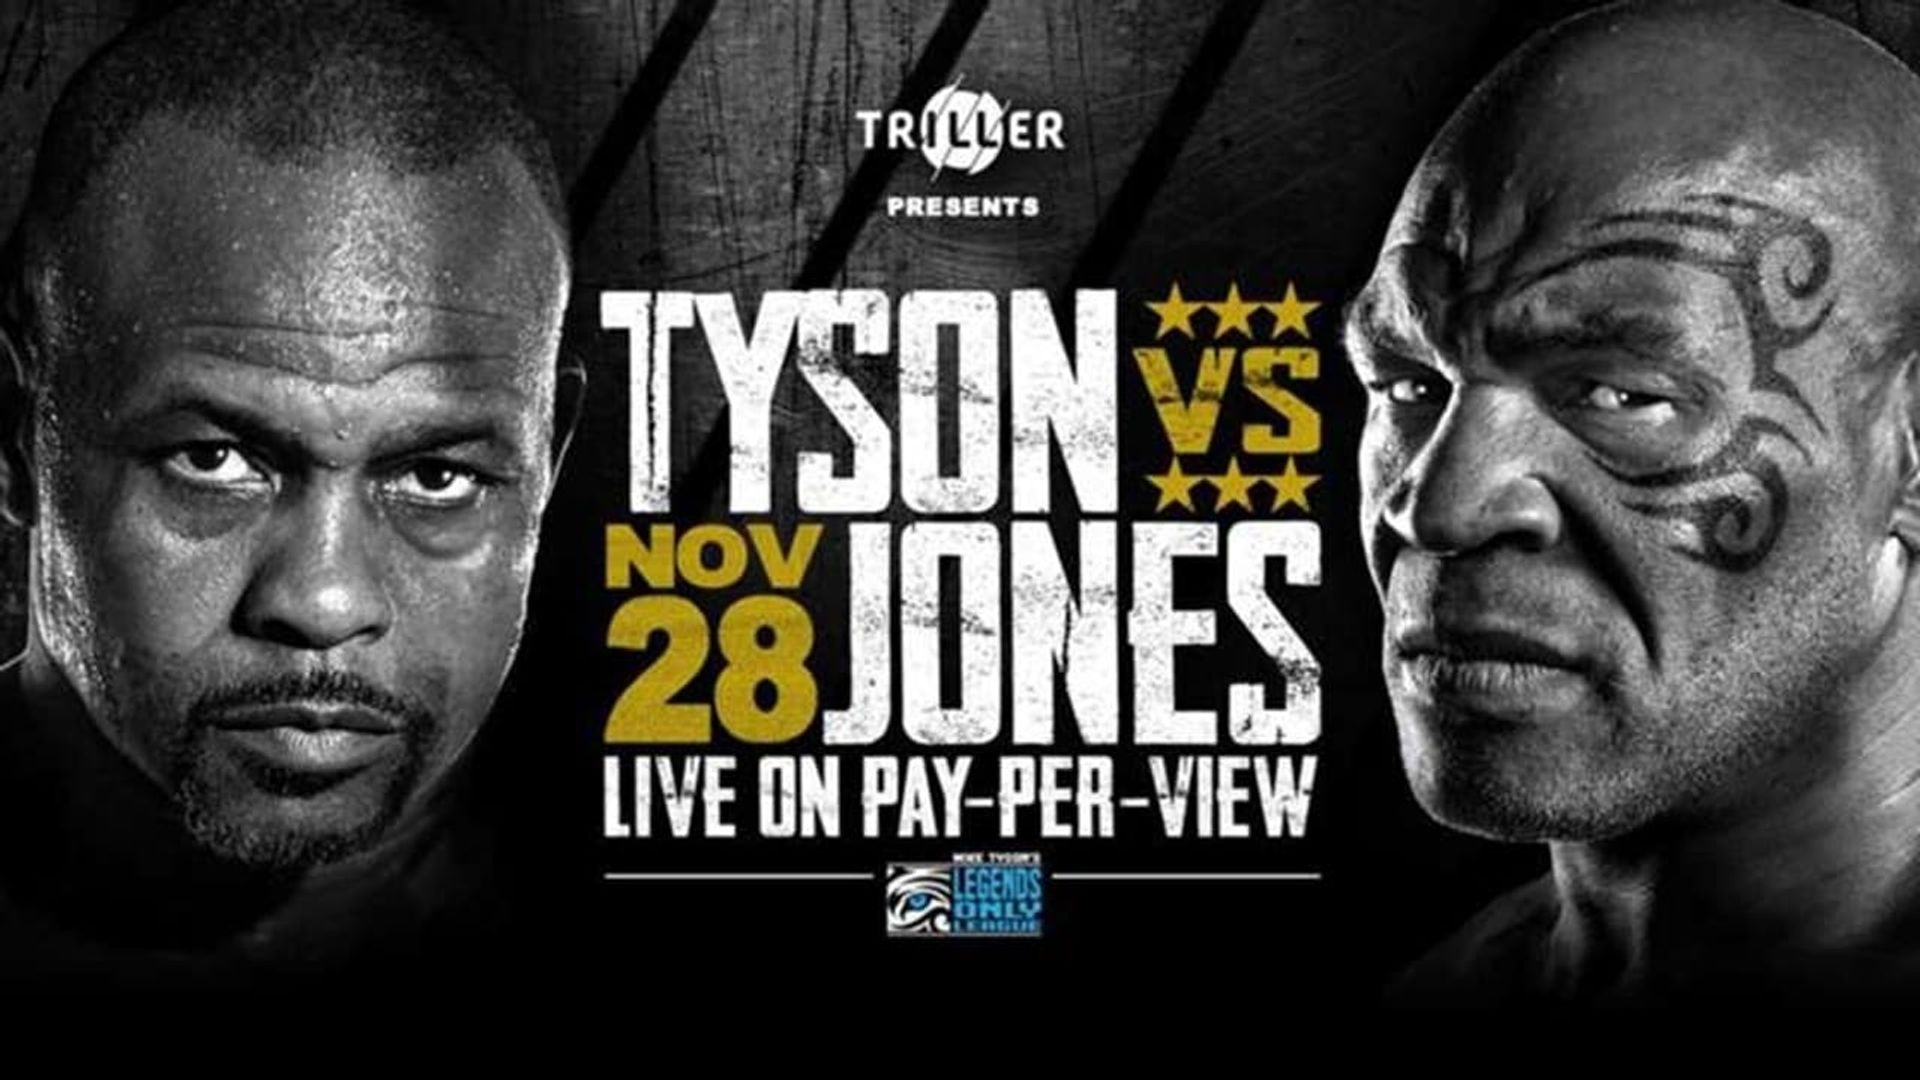 Mike Tyson vs Roy Jones Jr. background